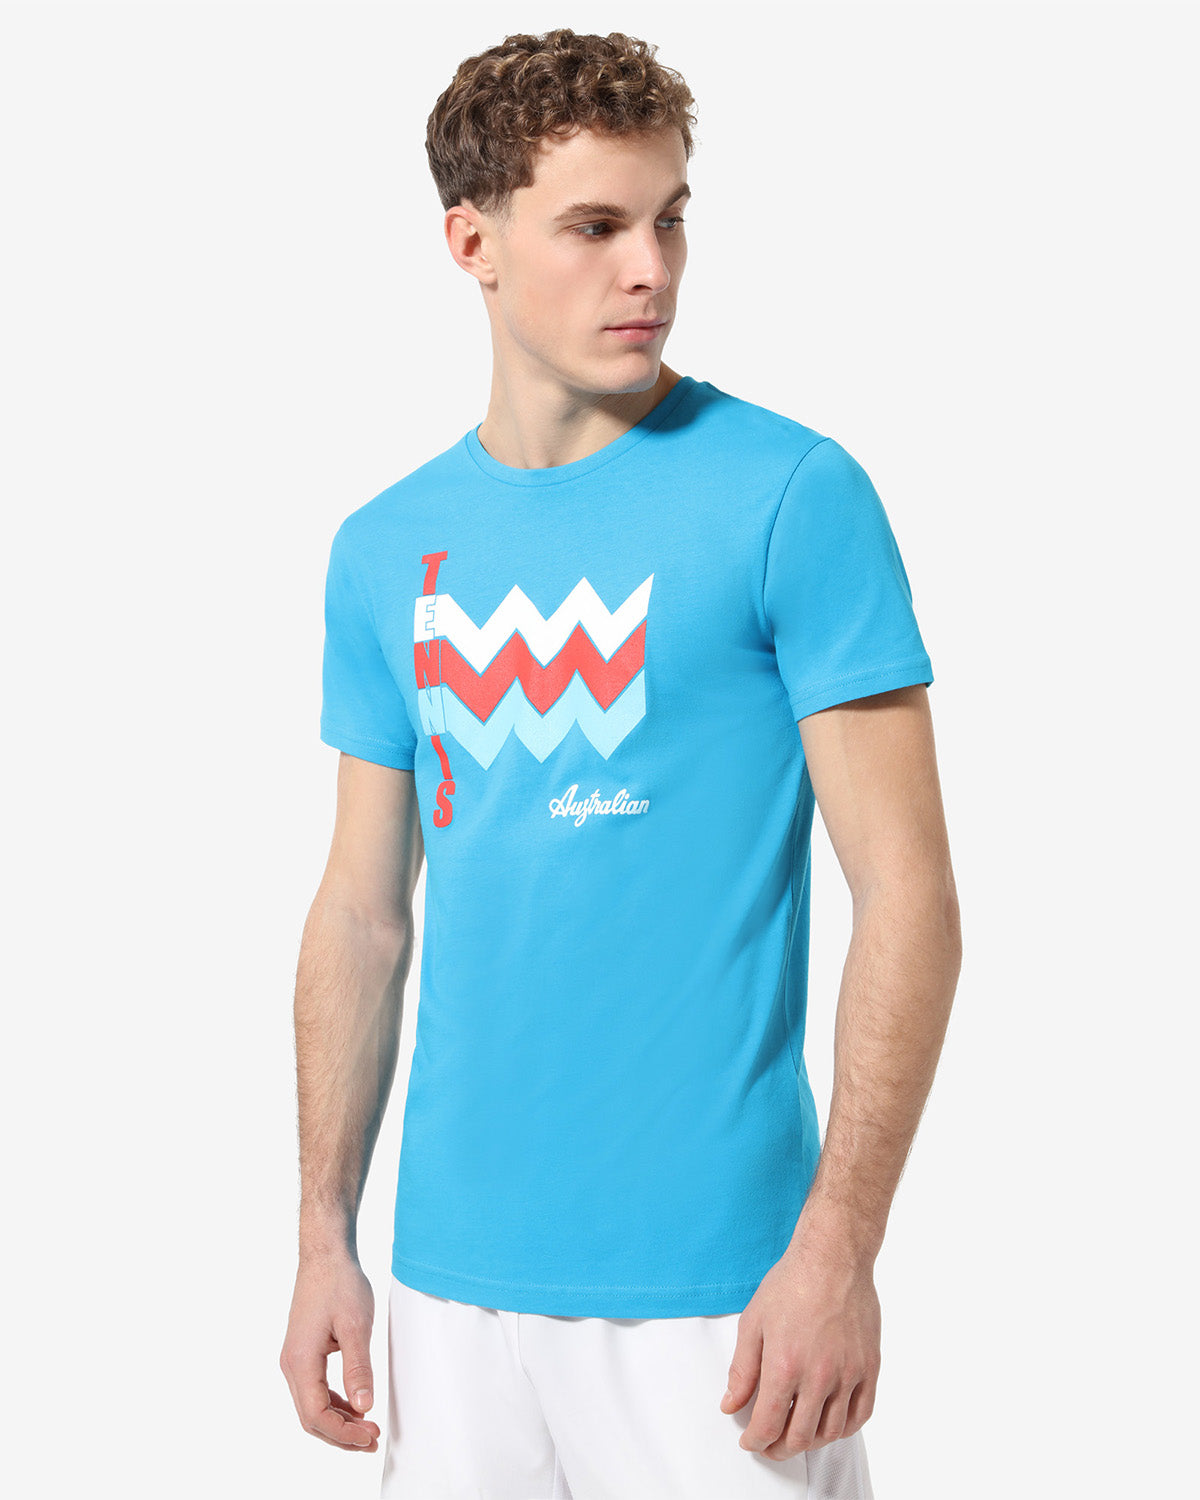 Cotton Ethno T-shirt: Australian Tennis